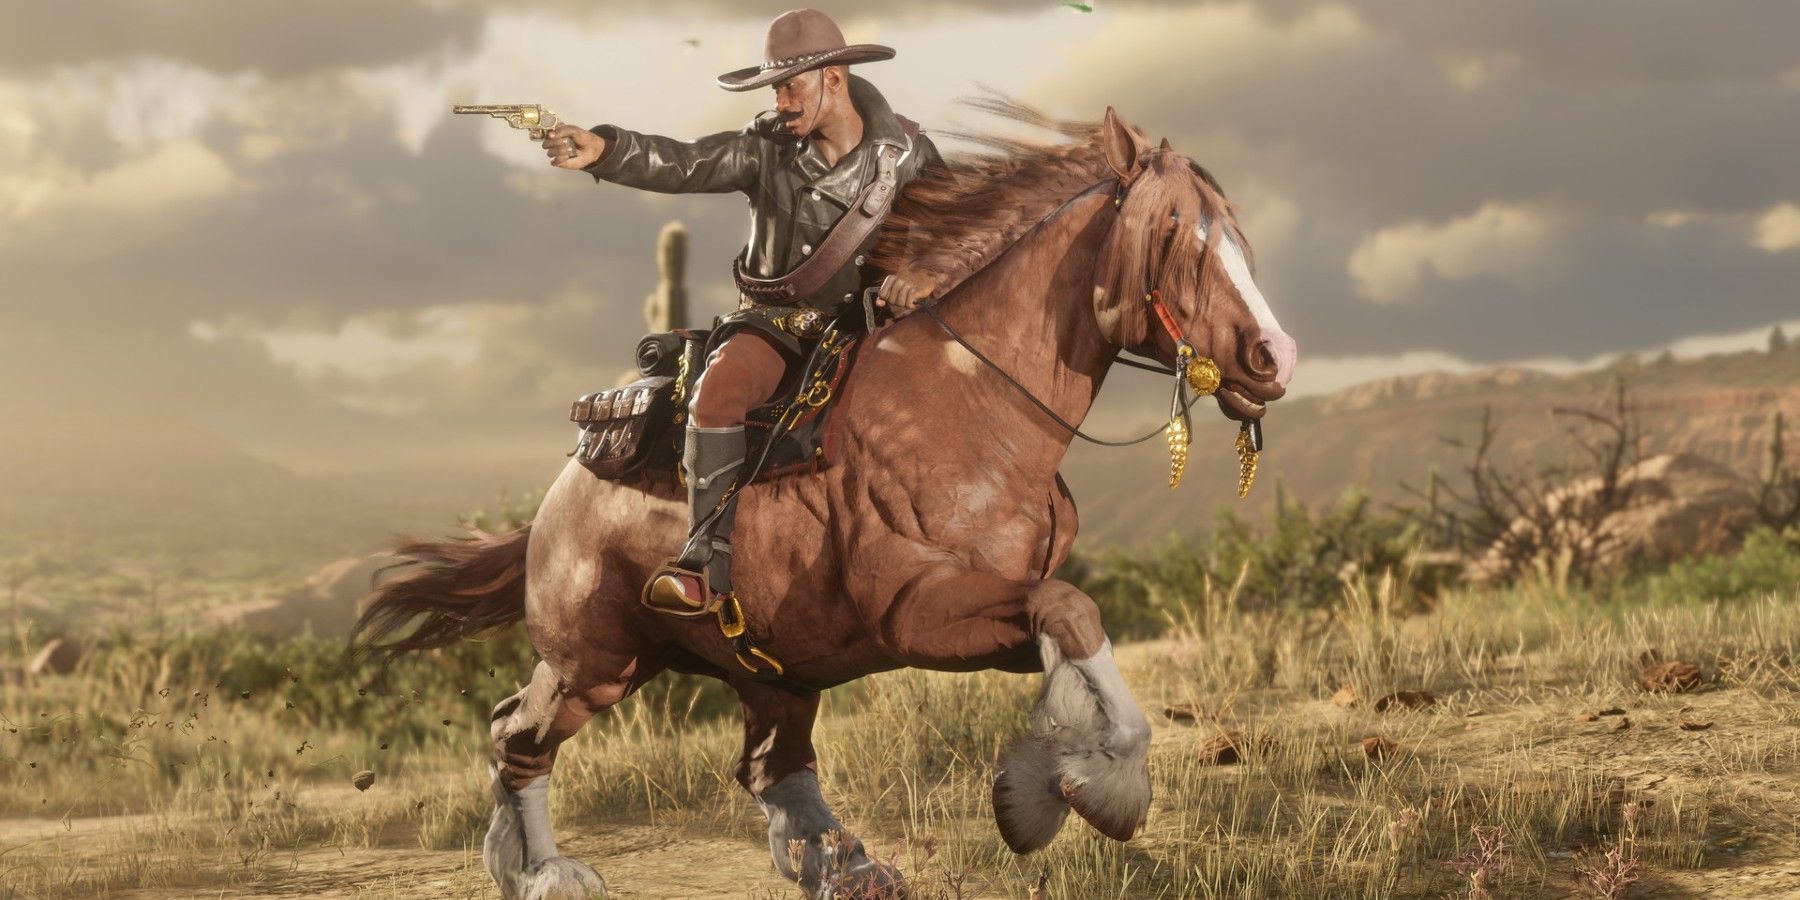 red dead online key art of a gunslinger pointing a revolver while on horseback